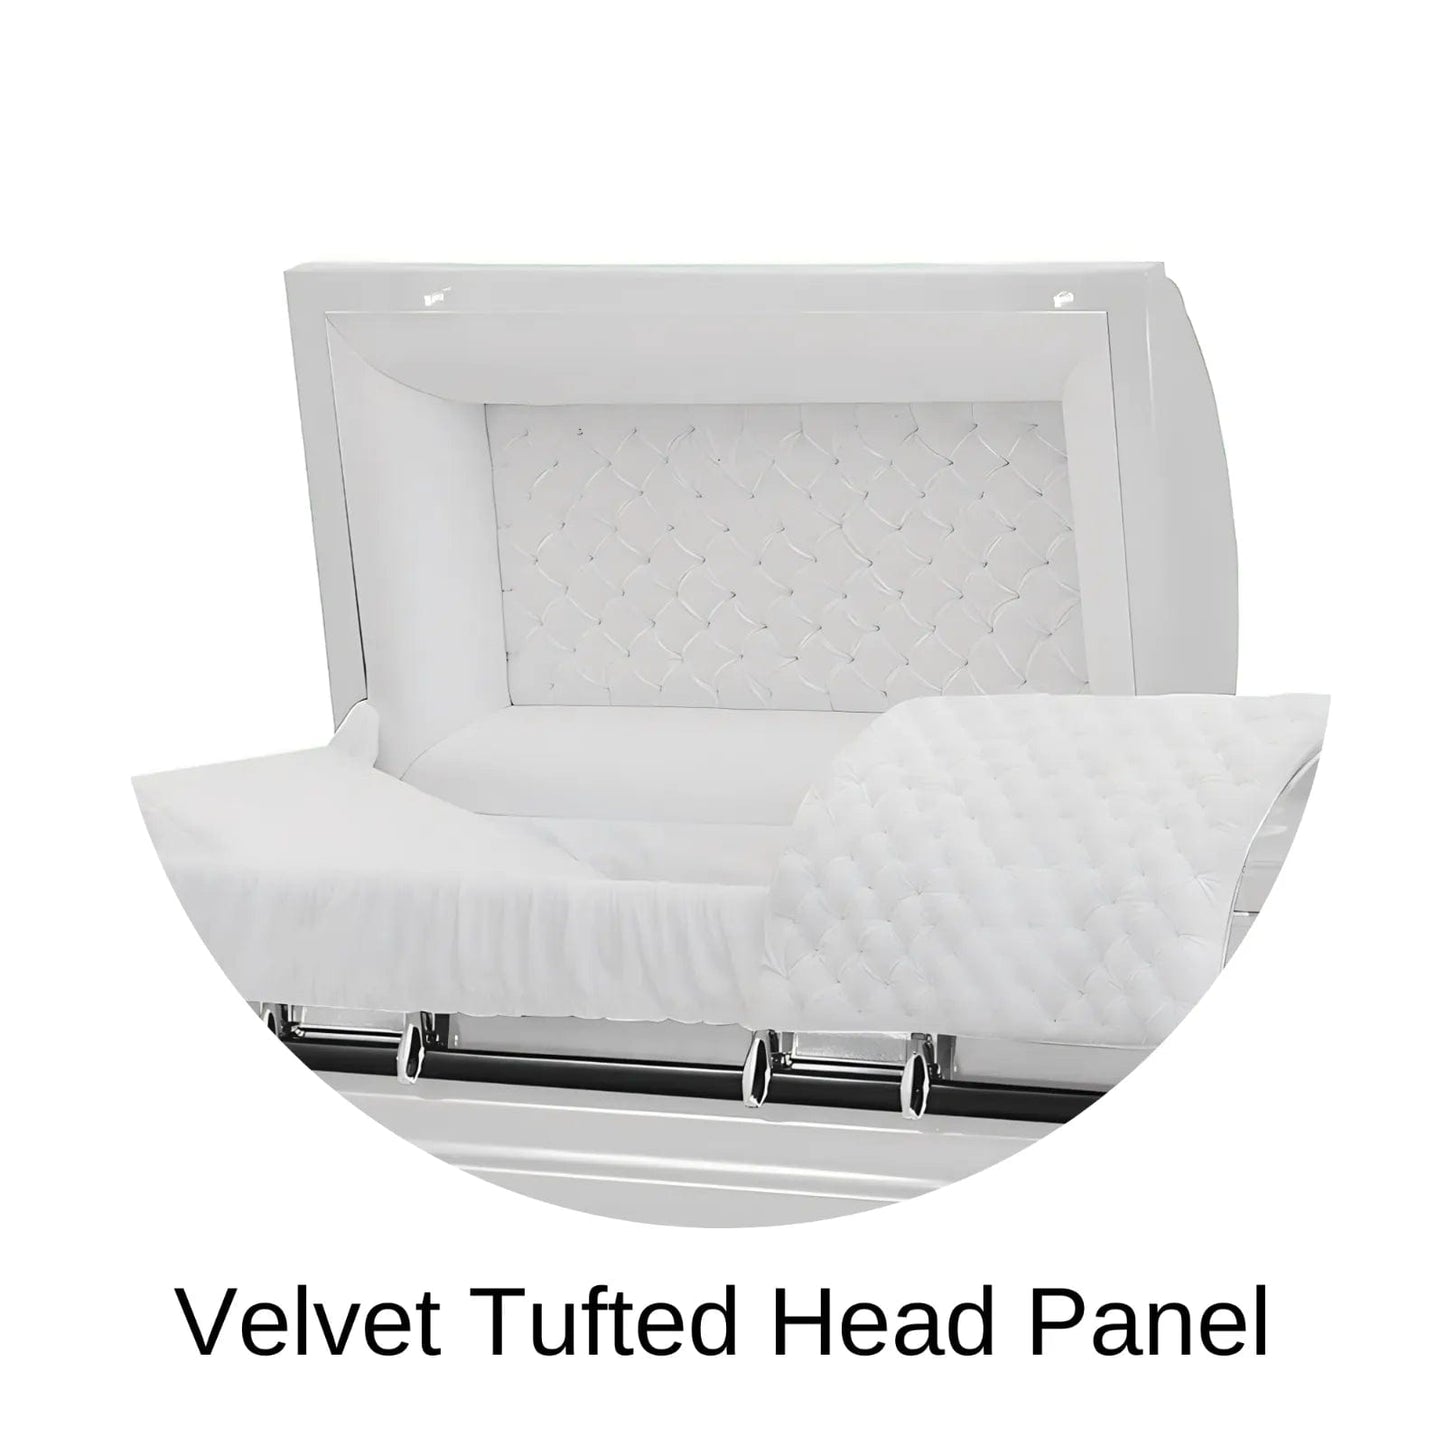 Velvet Tufted Head Panel Of Titan Era Series Casket 